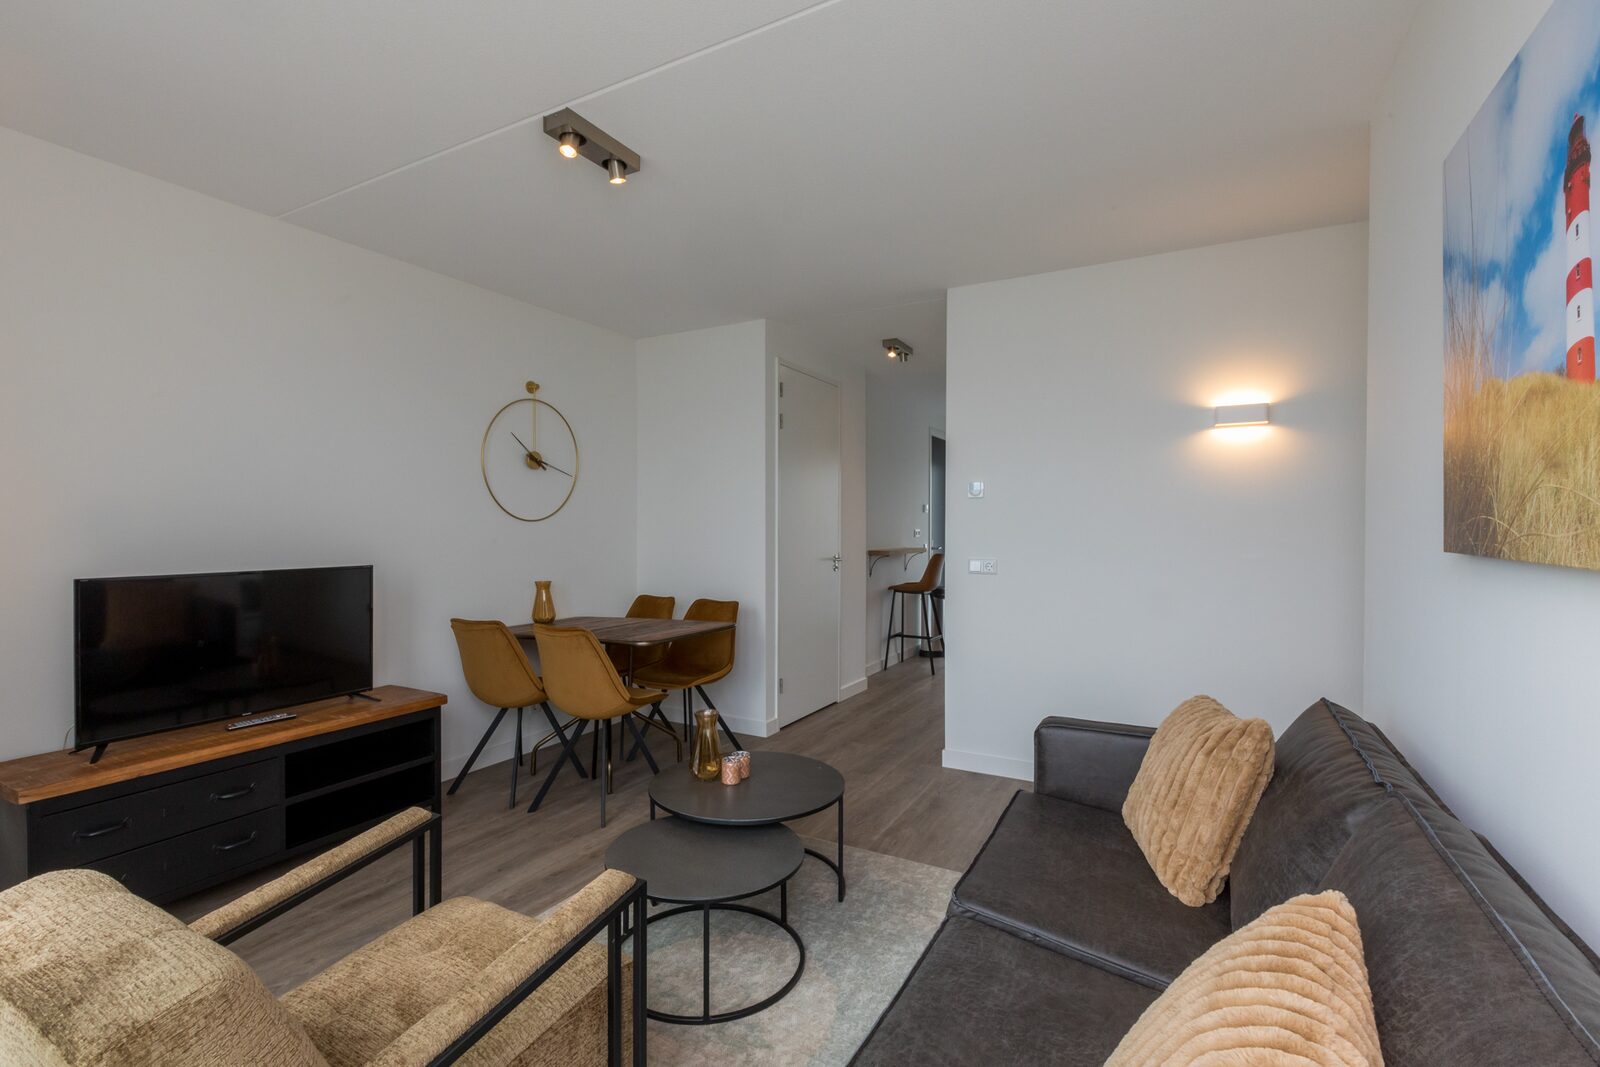 Luxe apartment  Vista Maris - Havenweg 8-4 | St. Annaland  